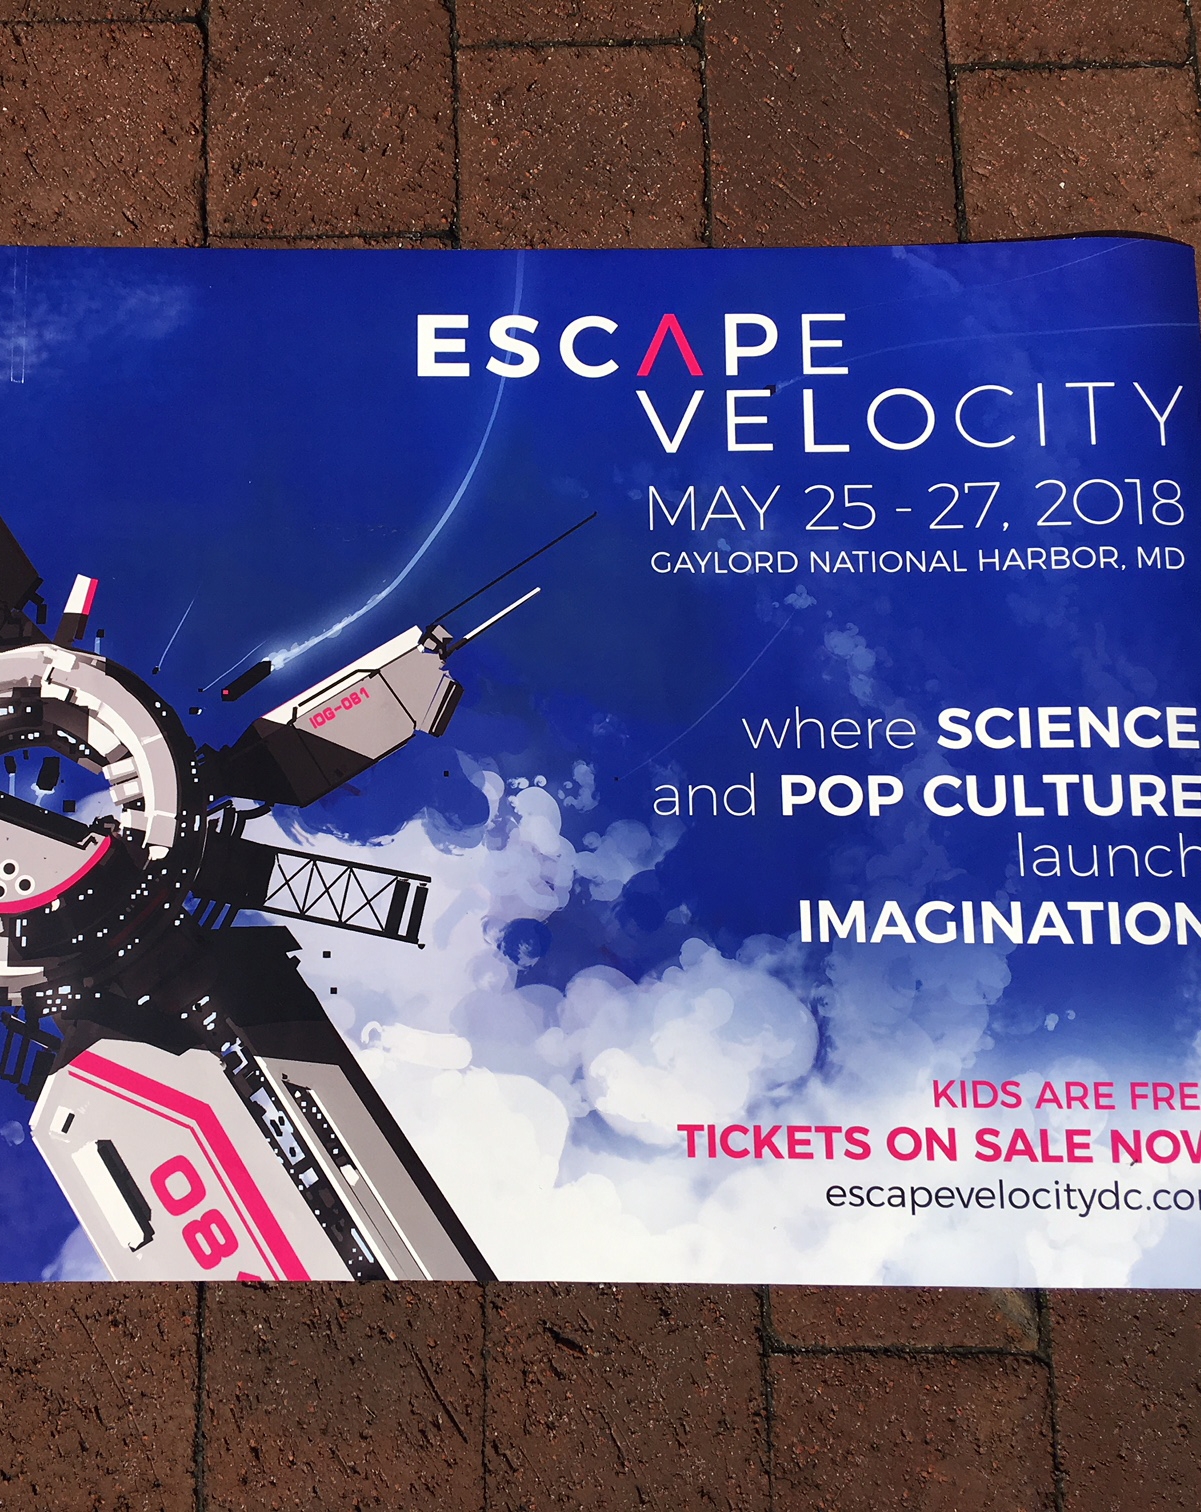 Escape Velocity event outdoor banner